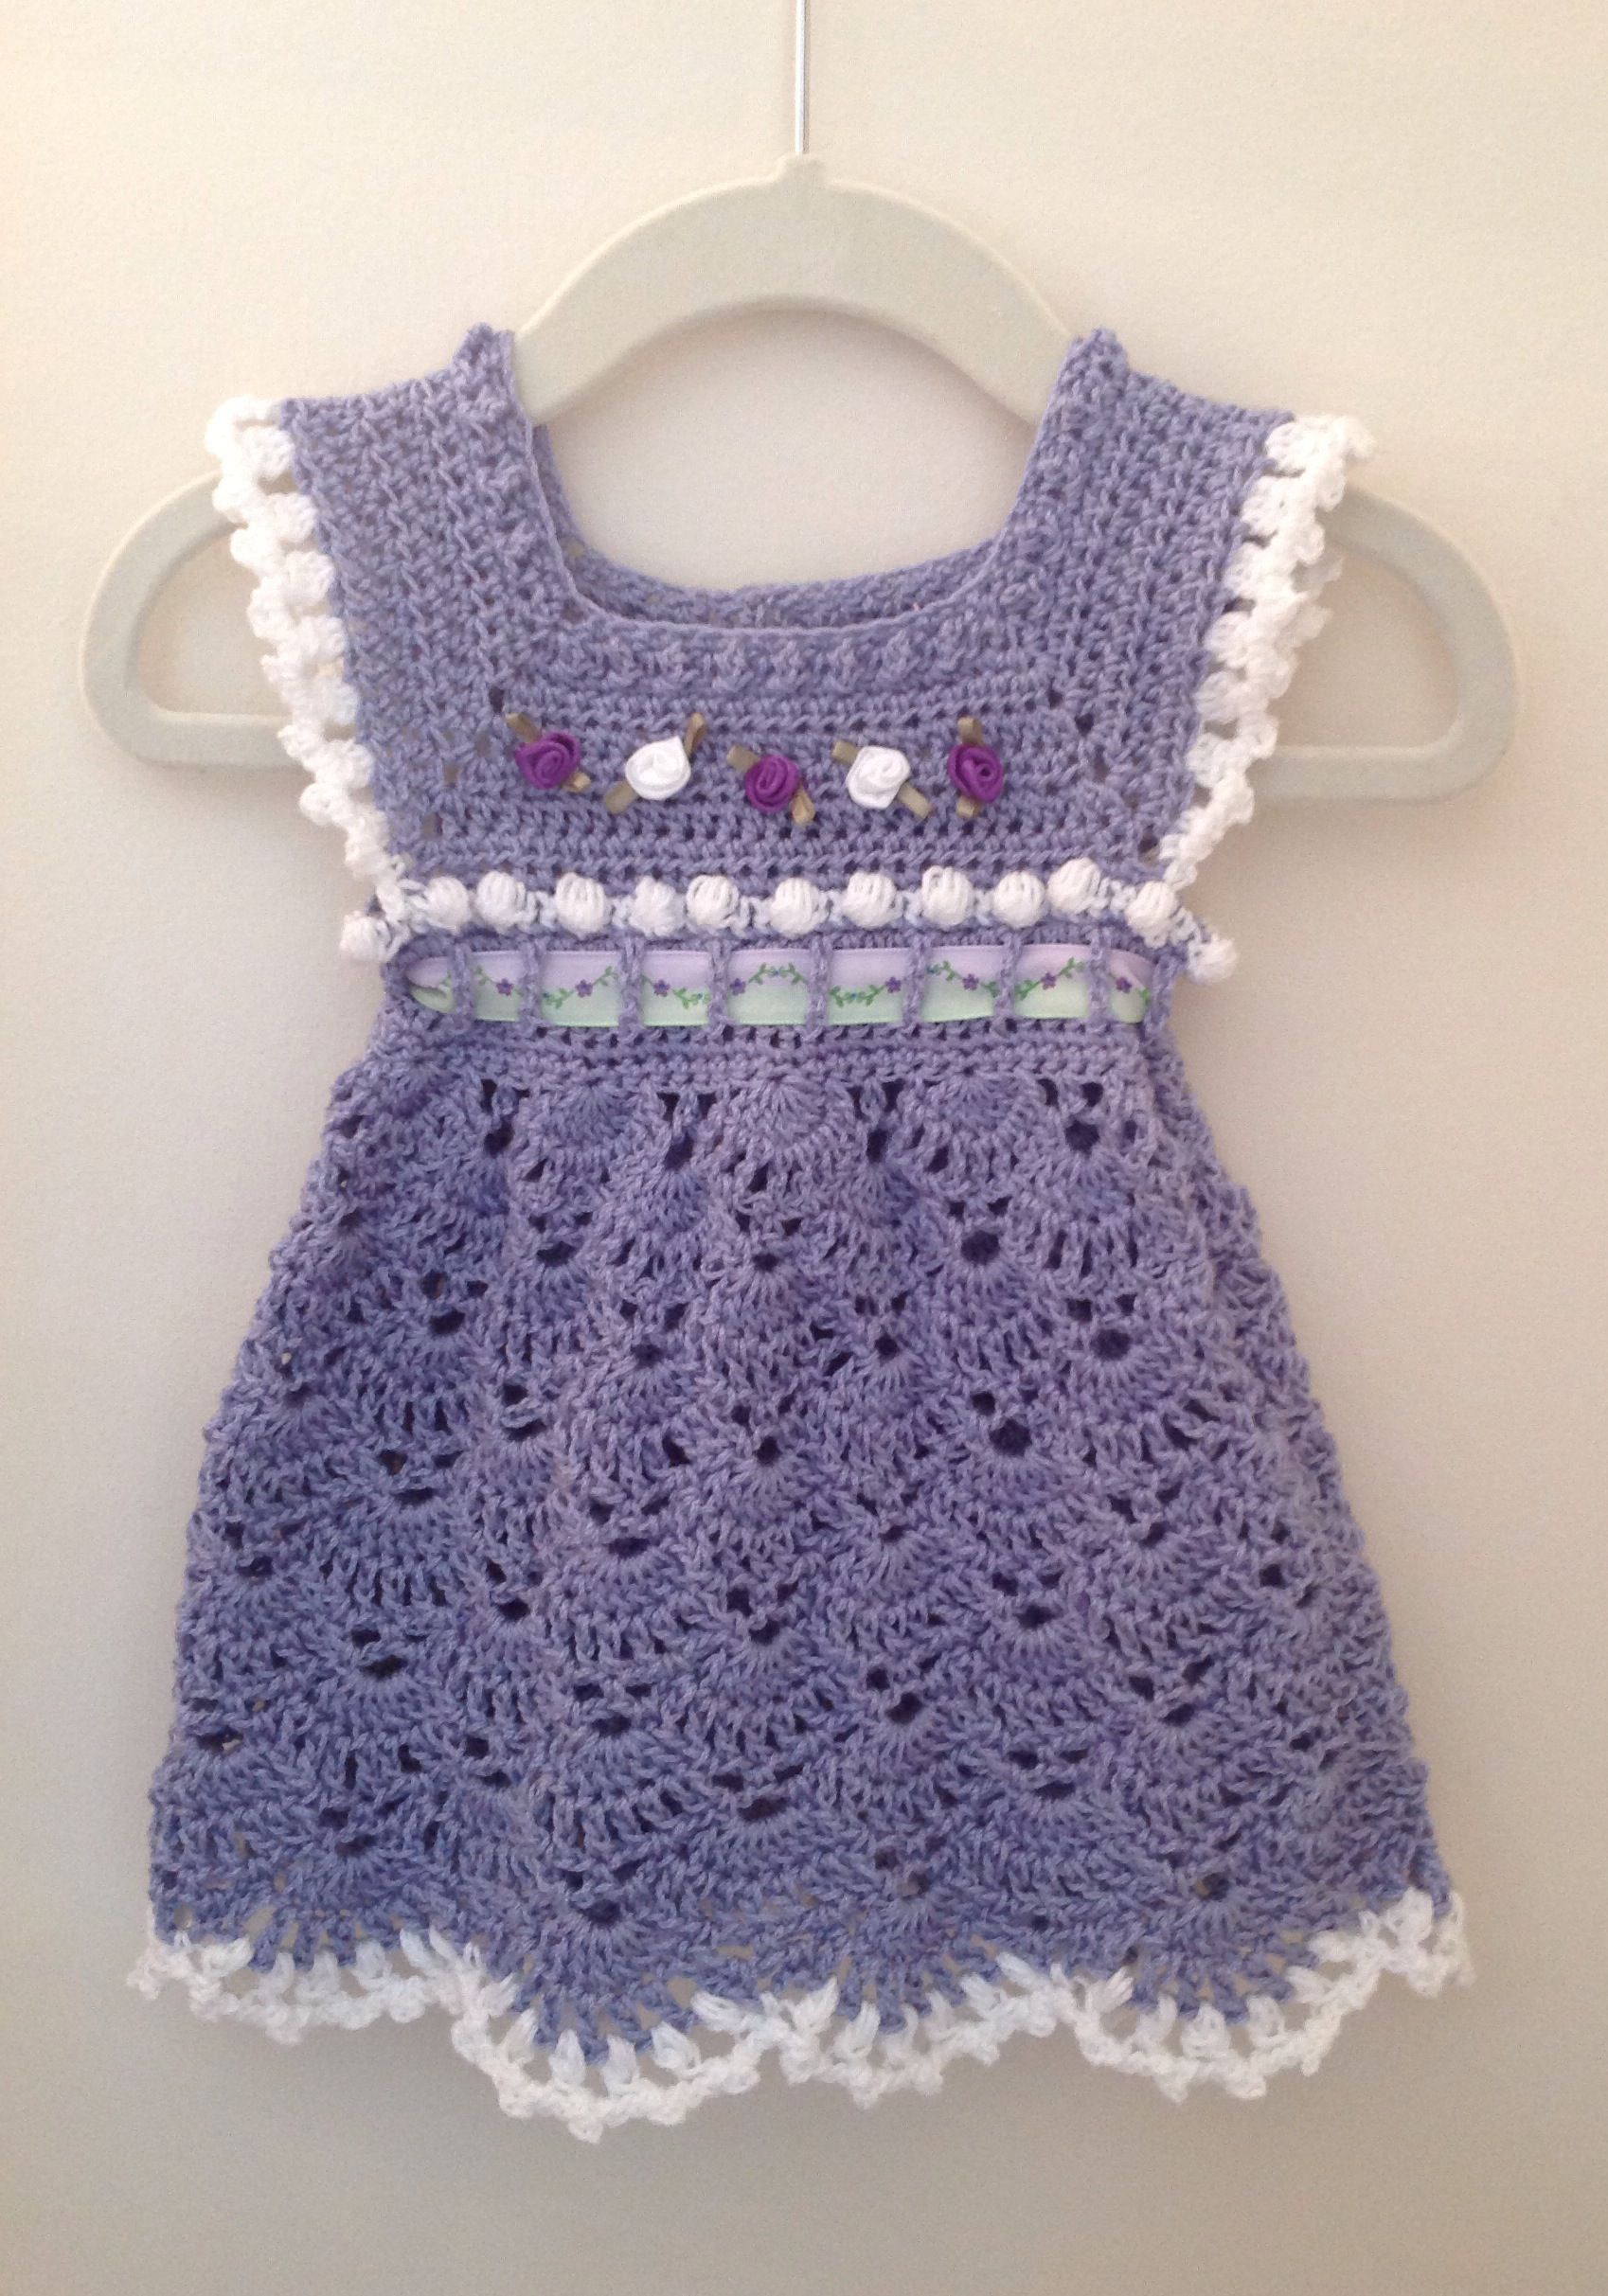 Crochet Baby Dress Free Pattern Crochet Infant Dress 6 9 Months Yummies Pinterest Crochet Ba